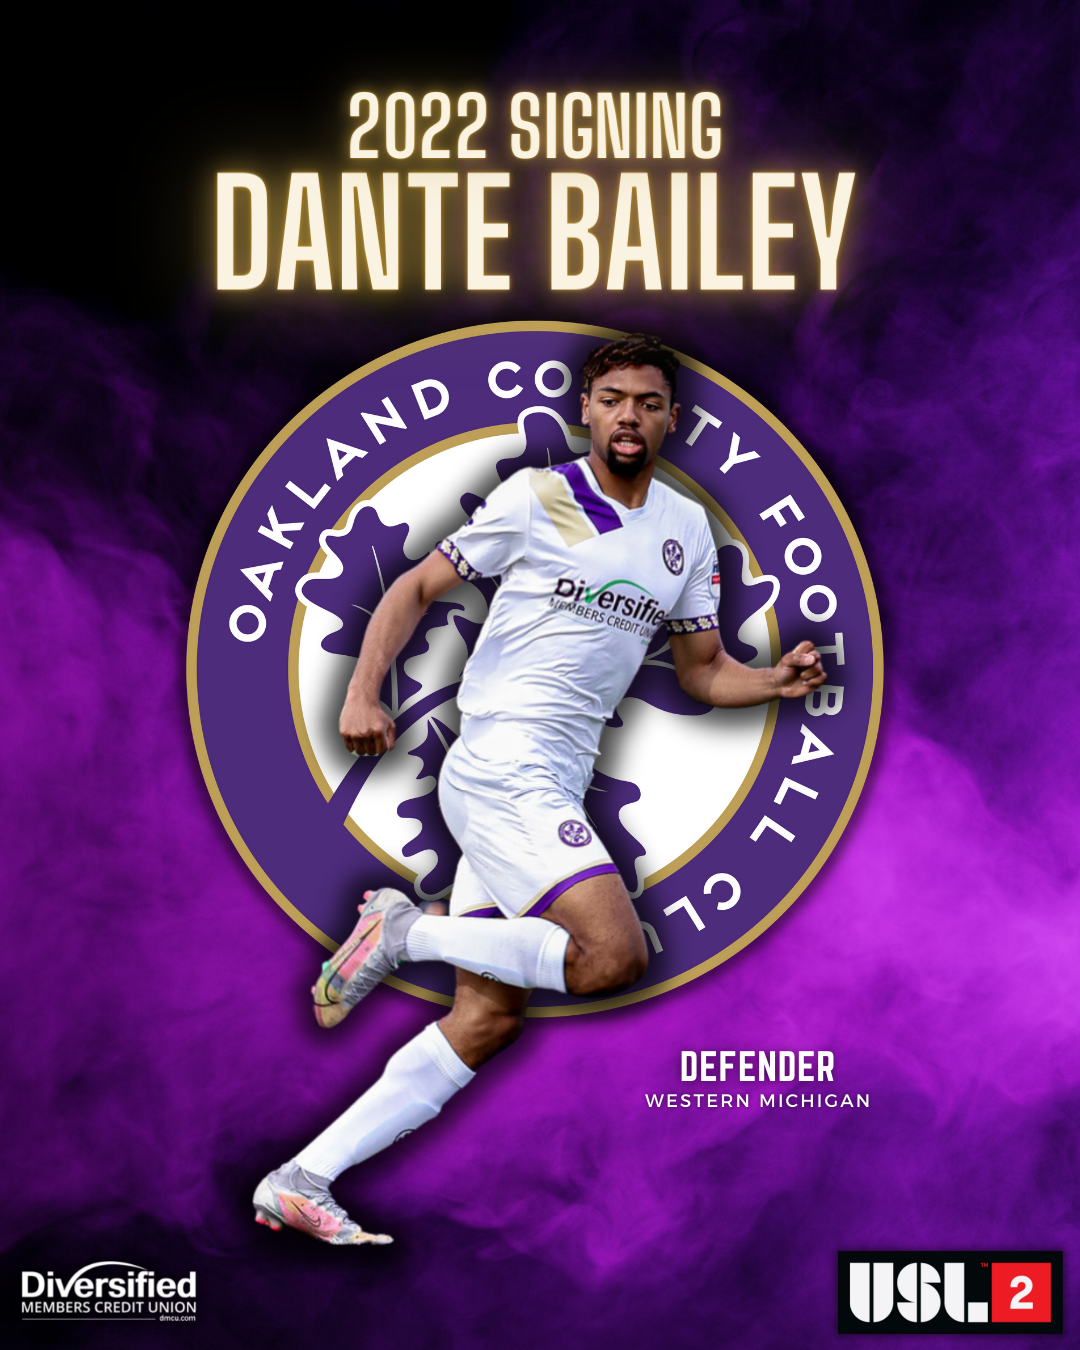 Dante Bailey